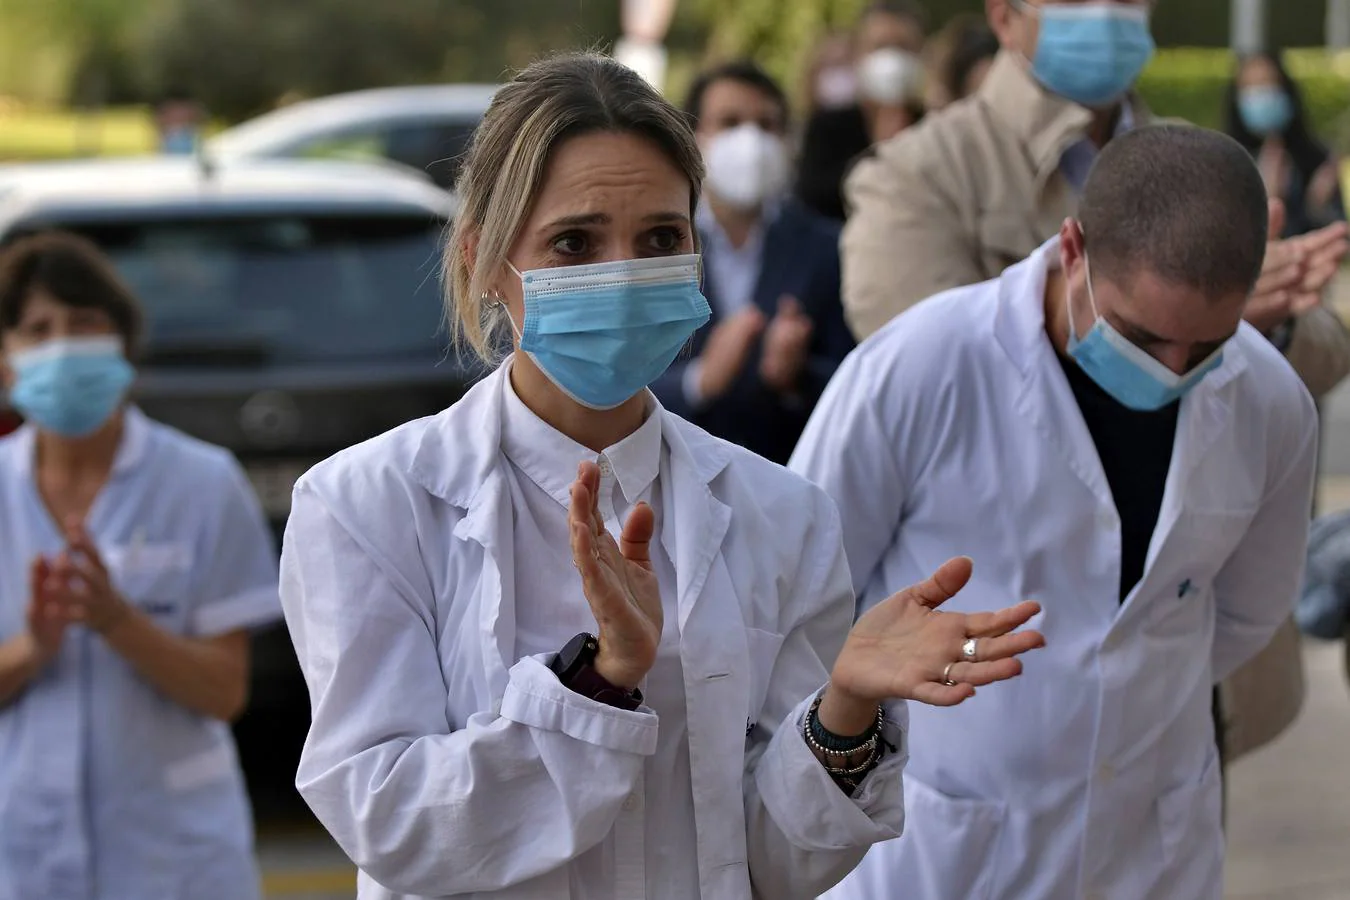 Sentido homenaje al médico fallecido en el Hospital Vithas Sevilla por coronavirus